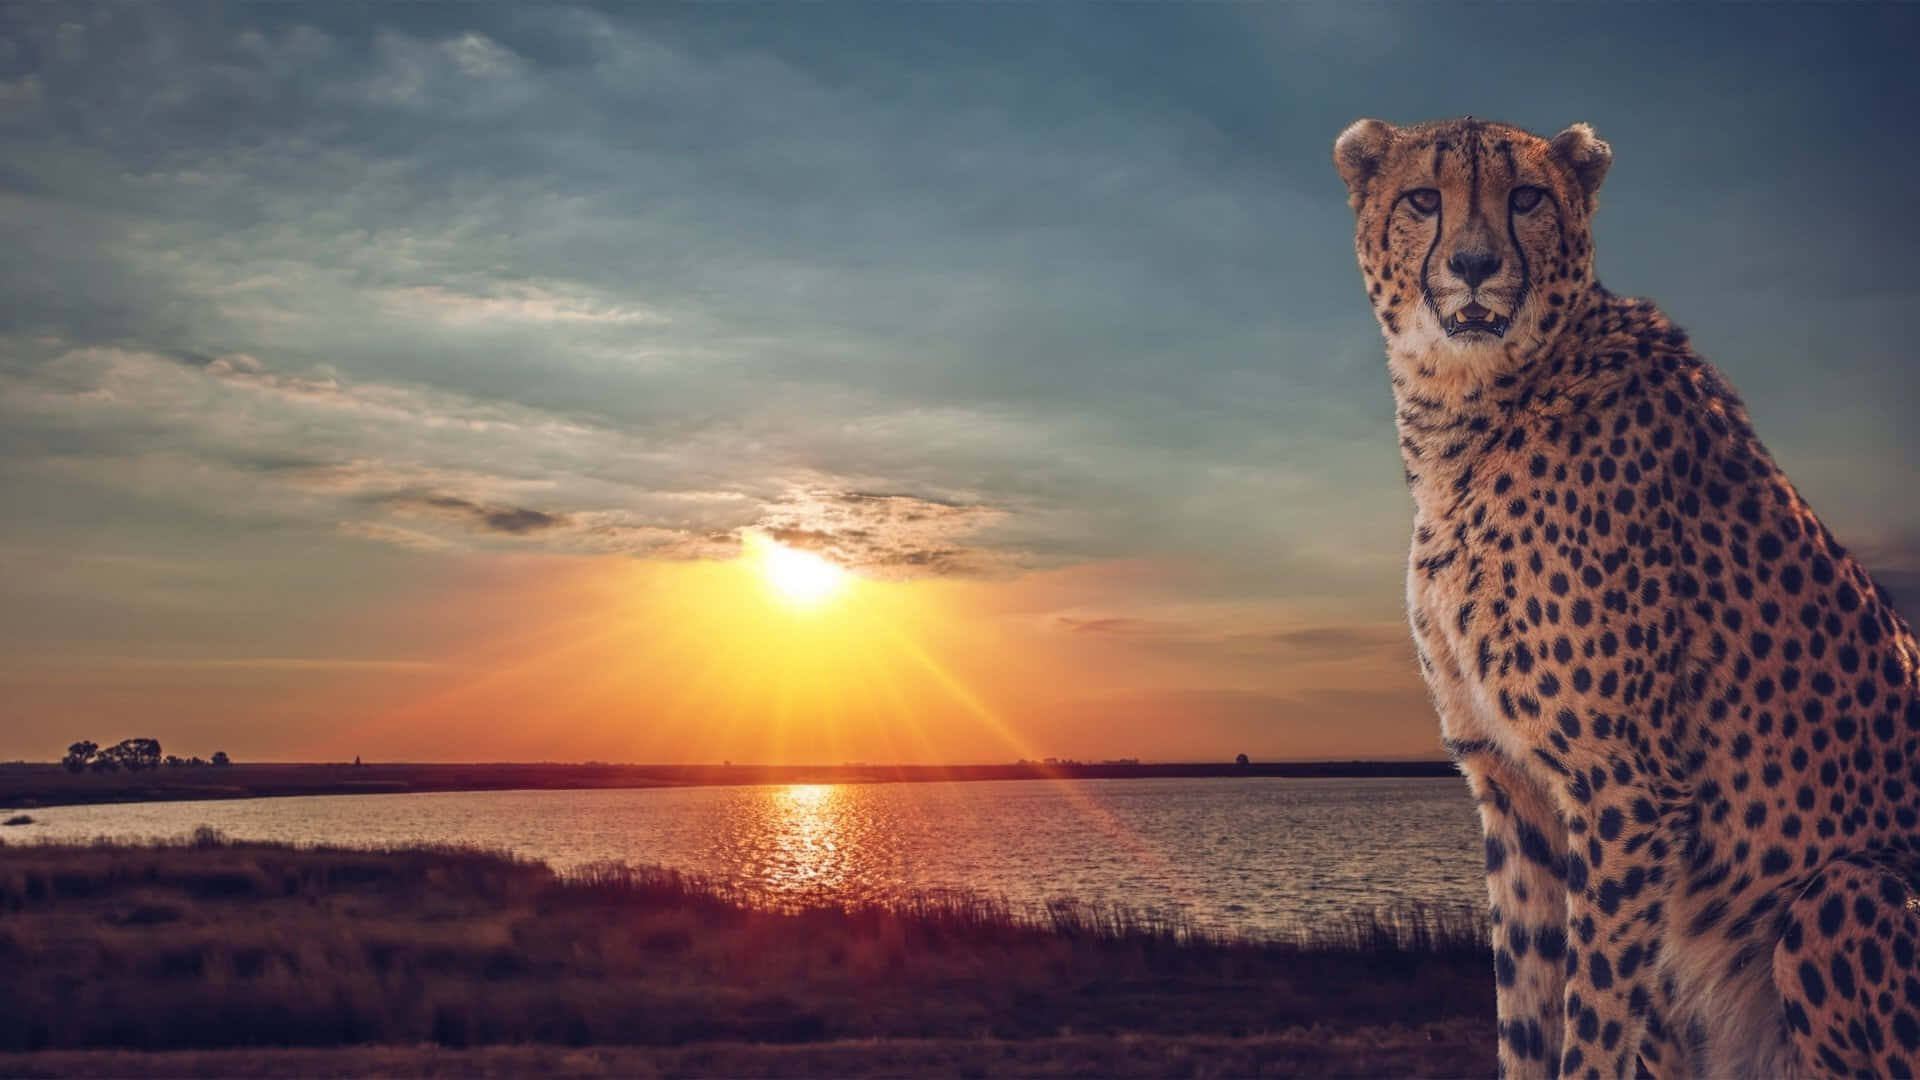 Cheetah HD Background Wallpaper [1920×1080] : r/wallpaper